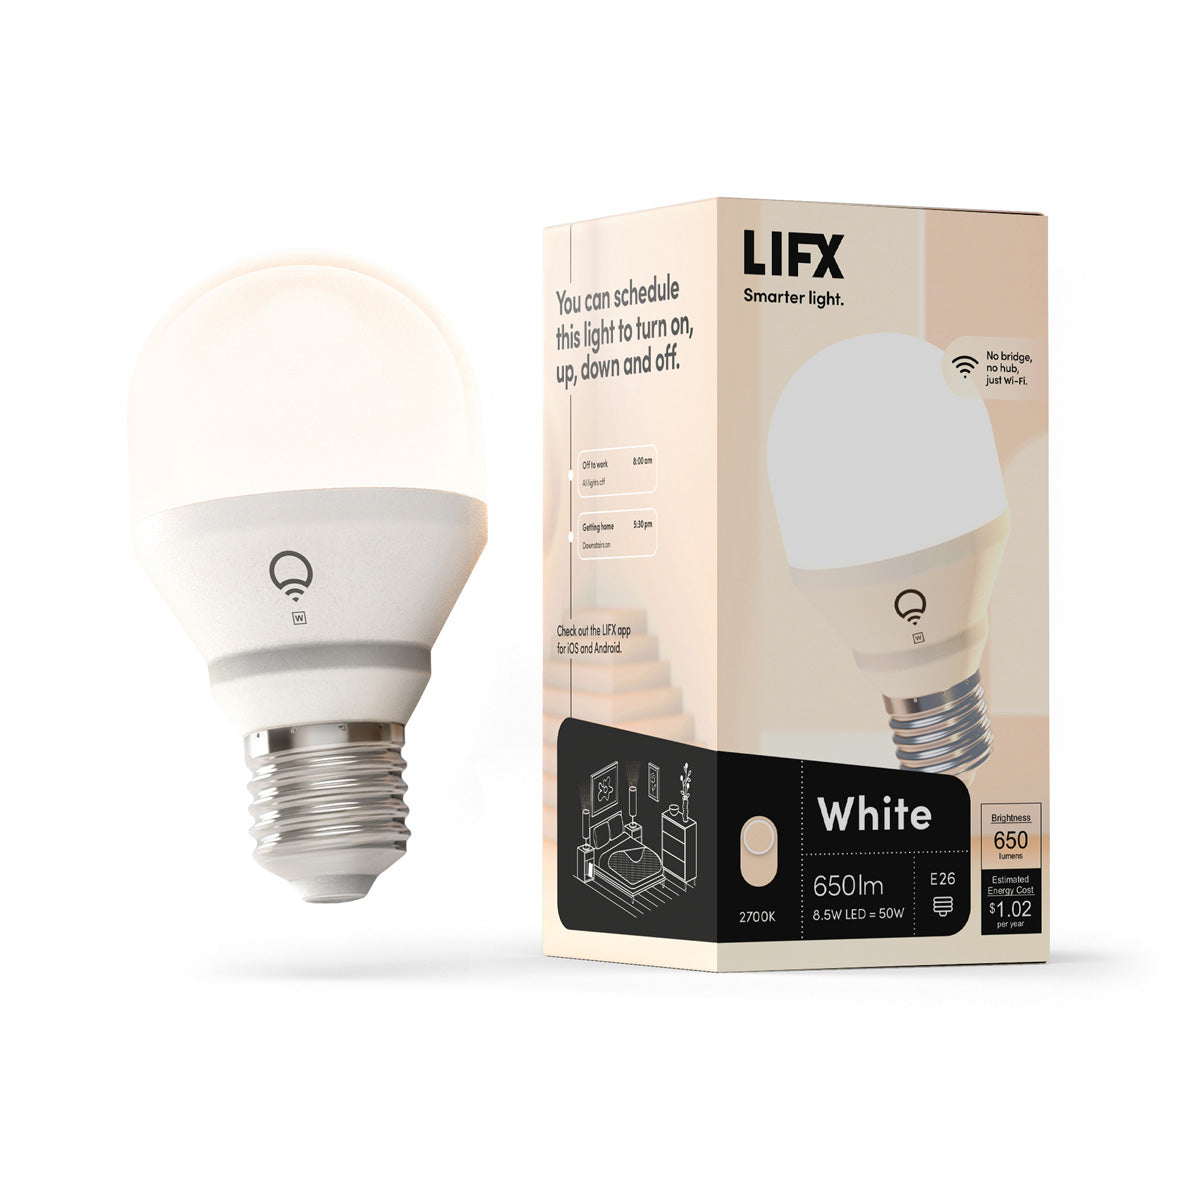 LIFX Lightbulb Collection